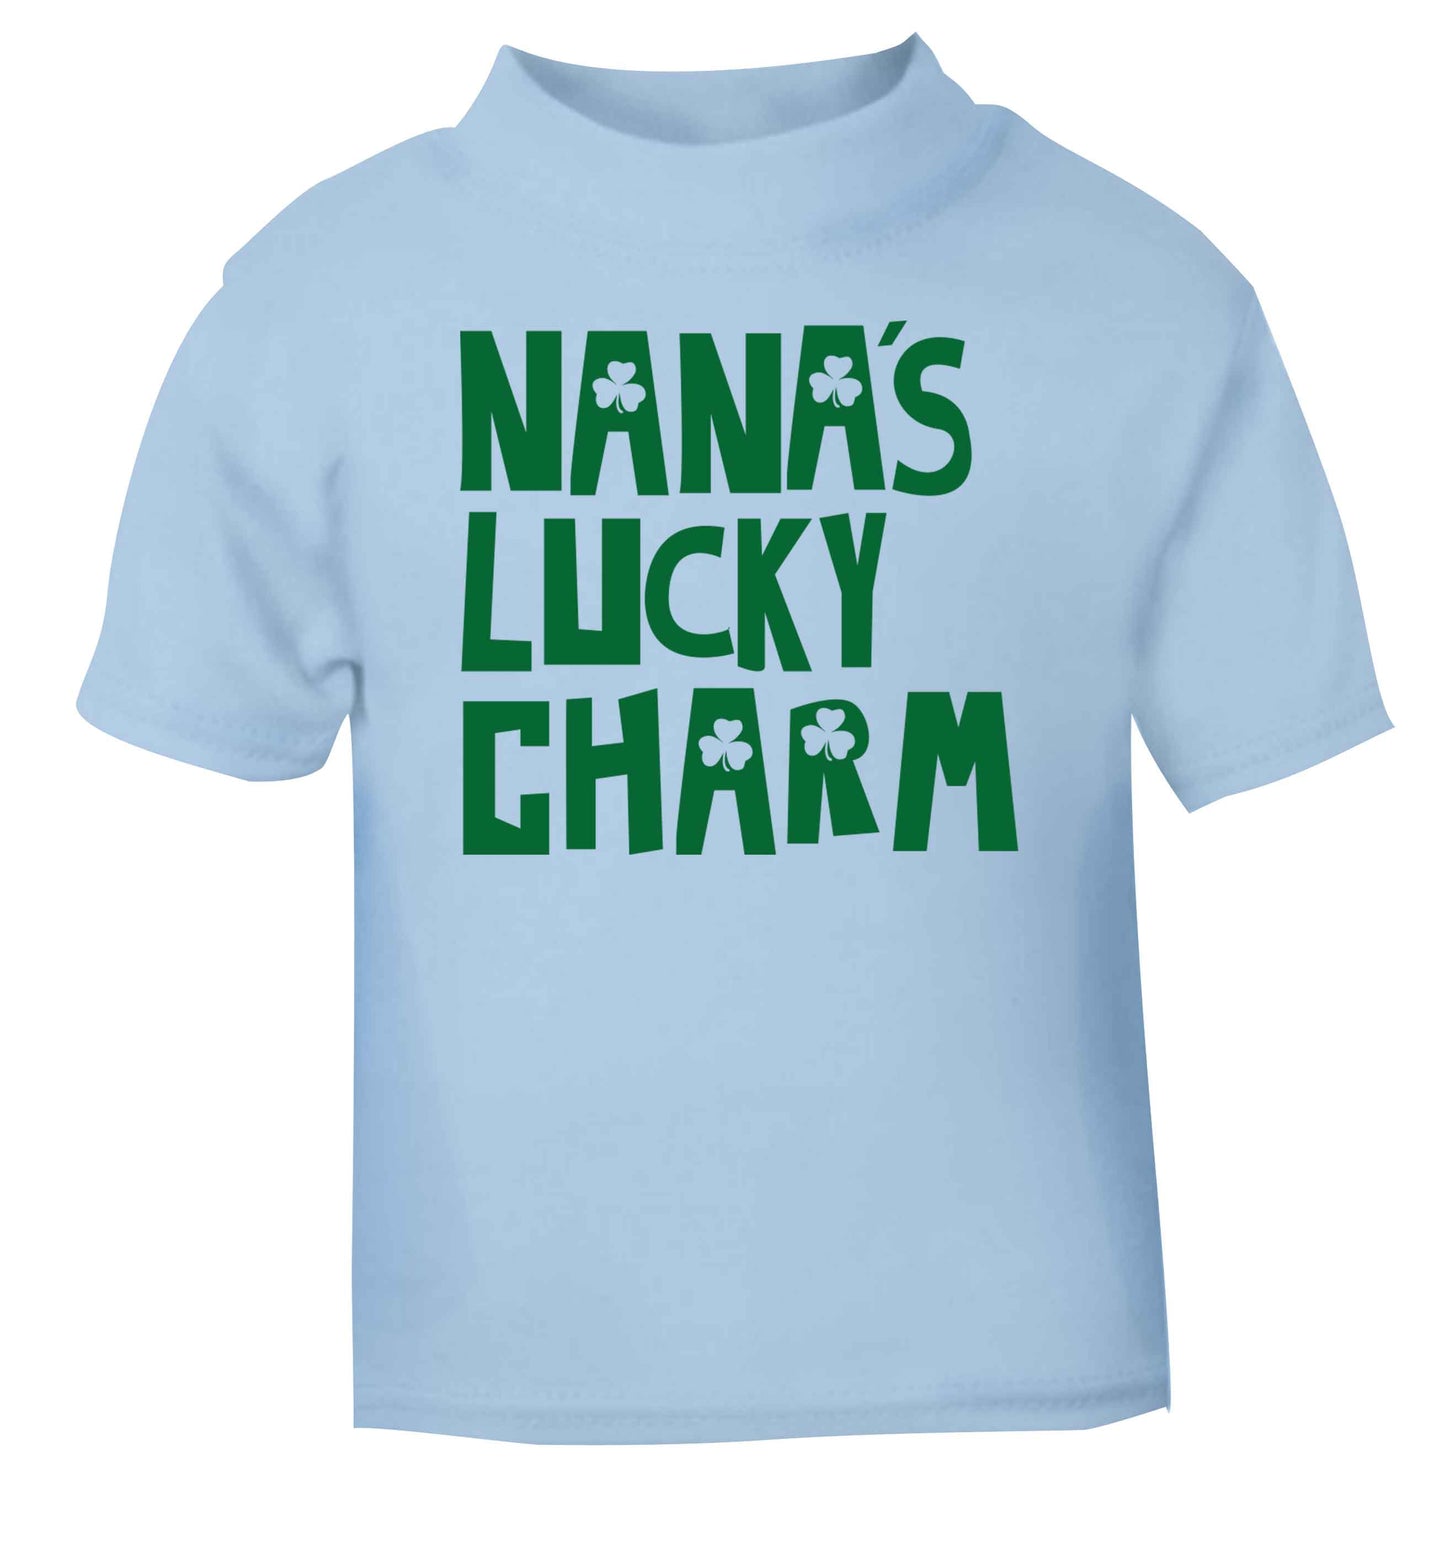 Nana's lucky charm light blue baby toddler Tshirt 2 Years